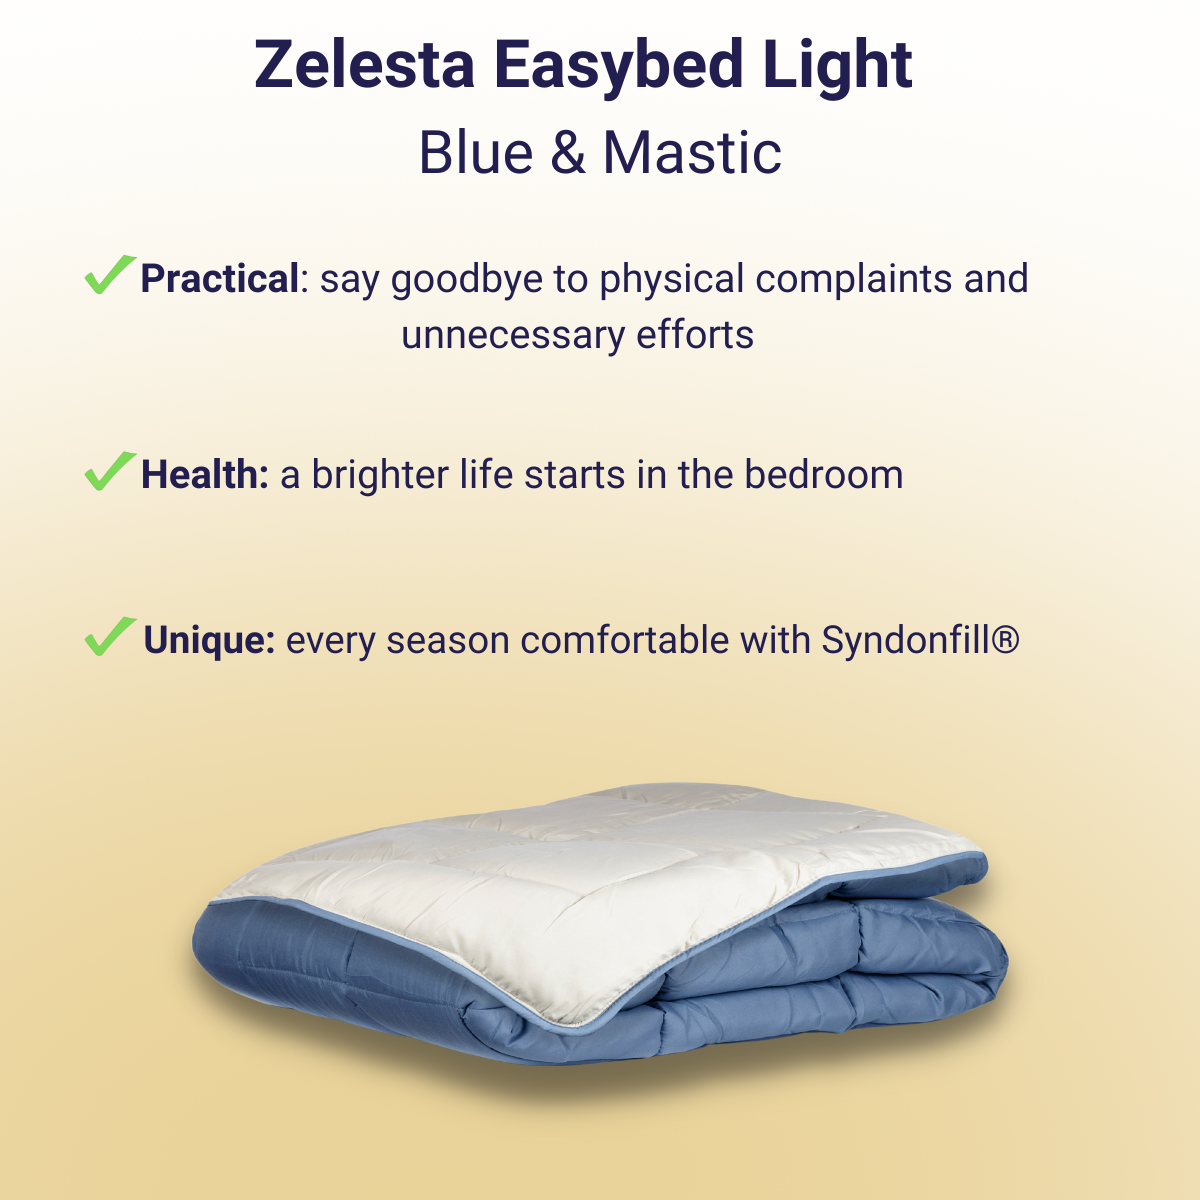 Zelesta Easybed Light - Blue & Mastic